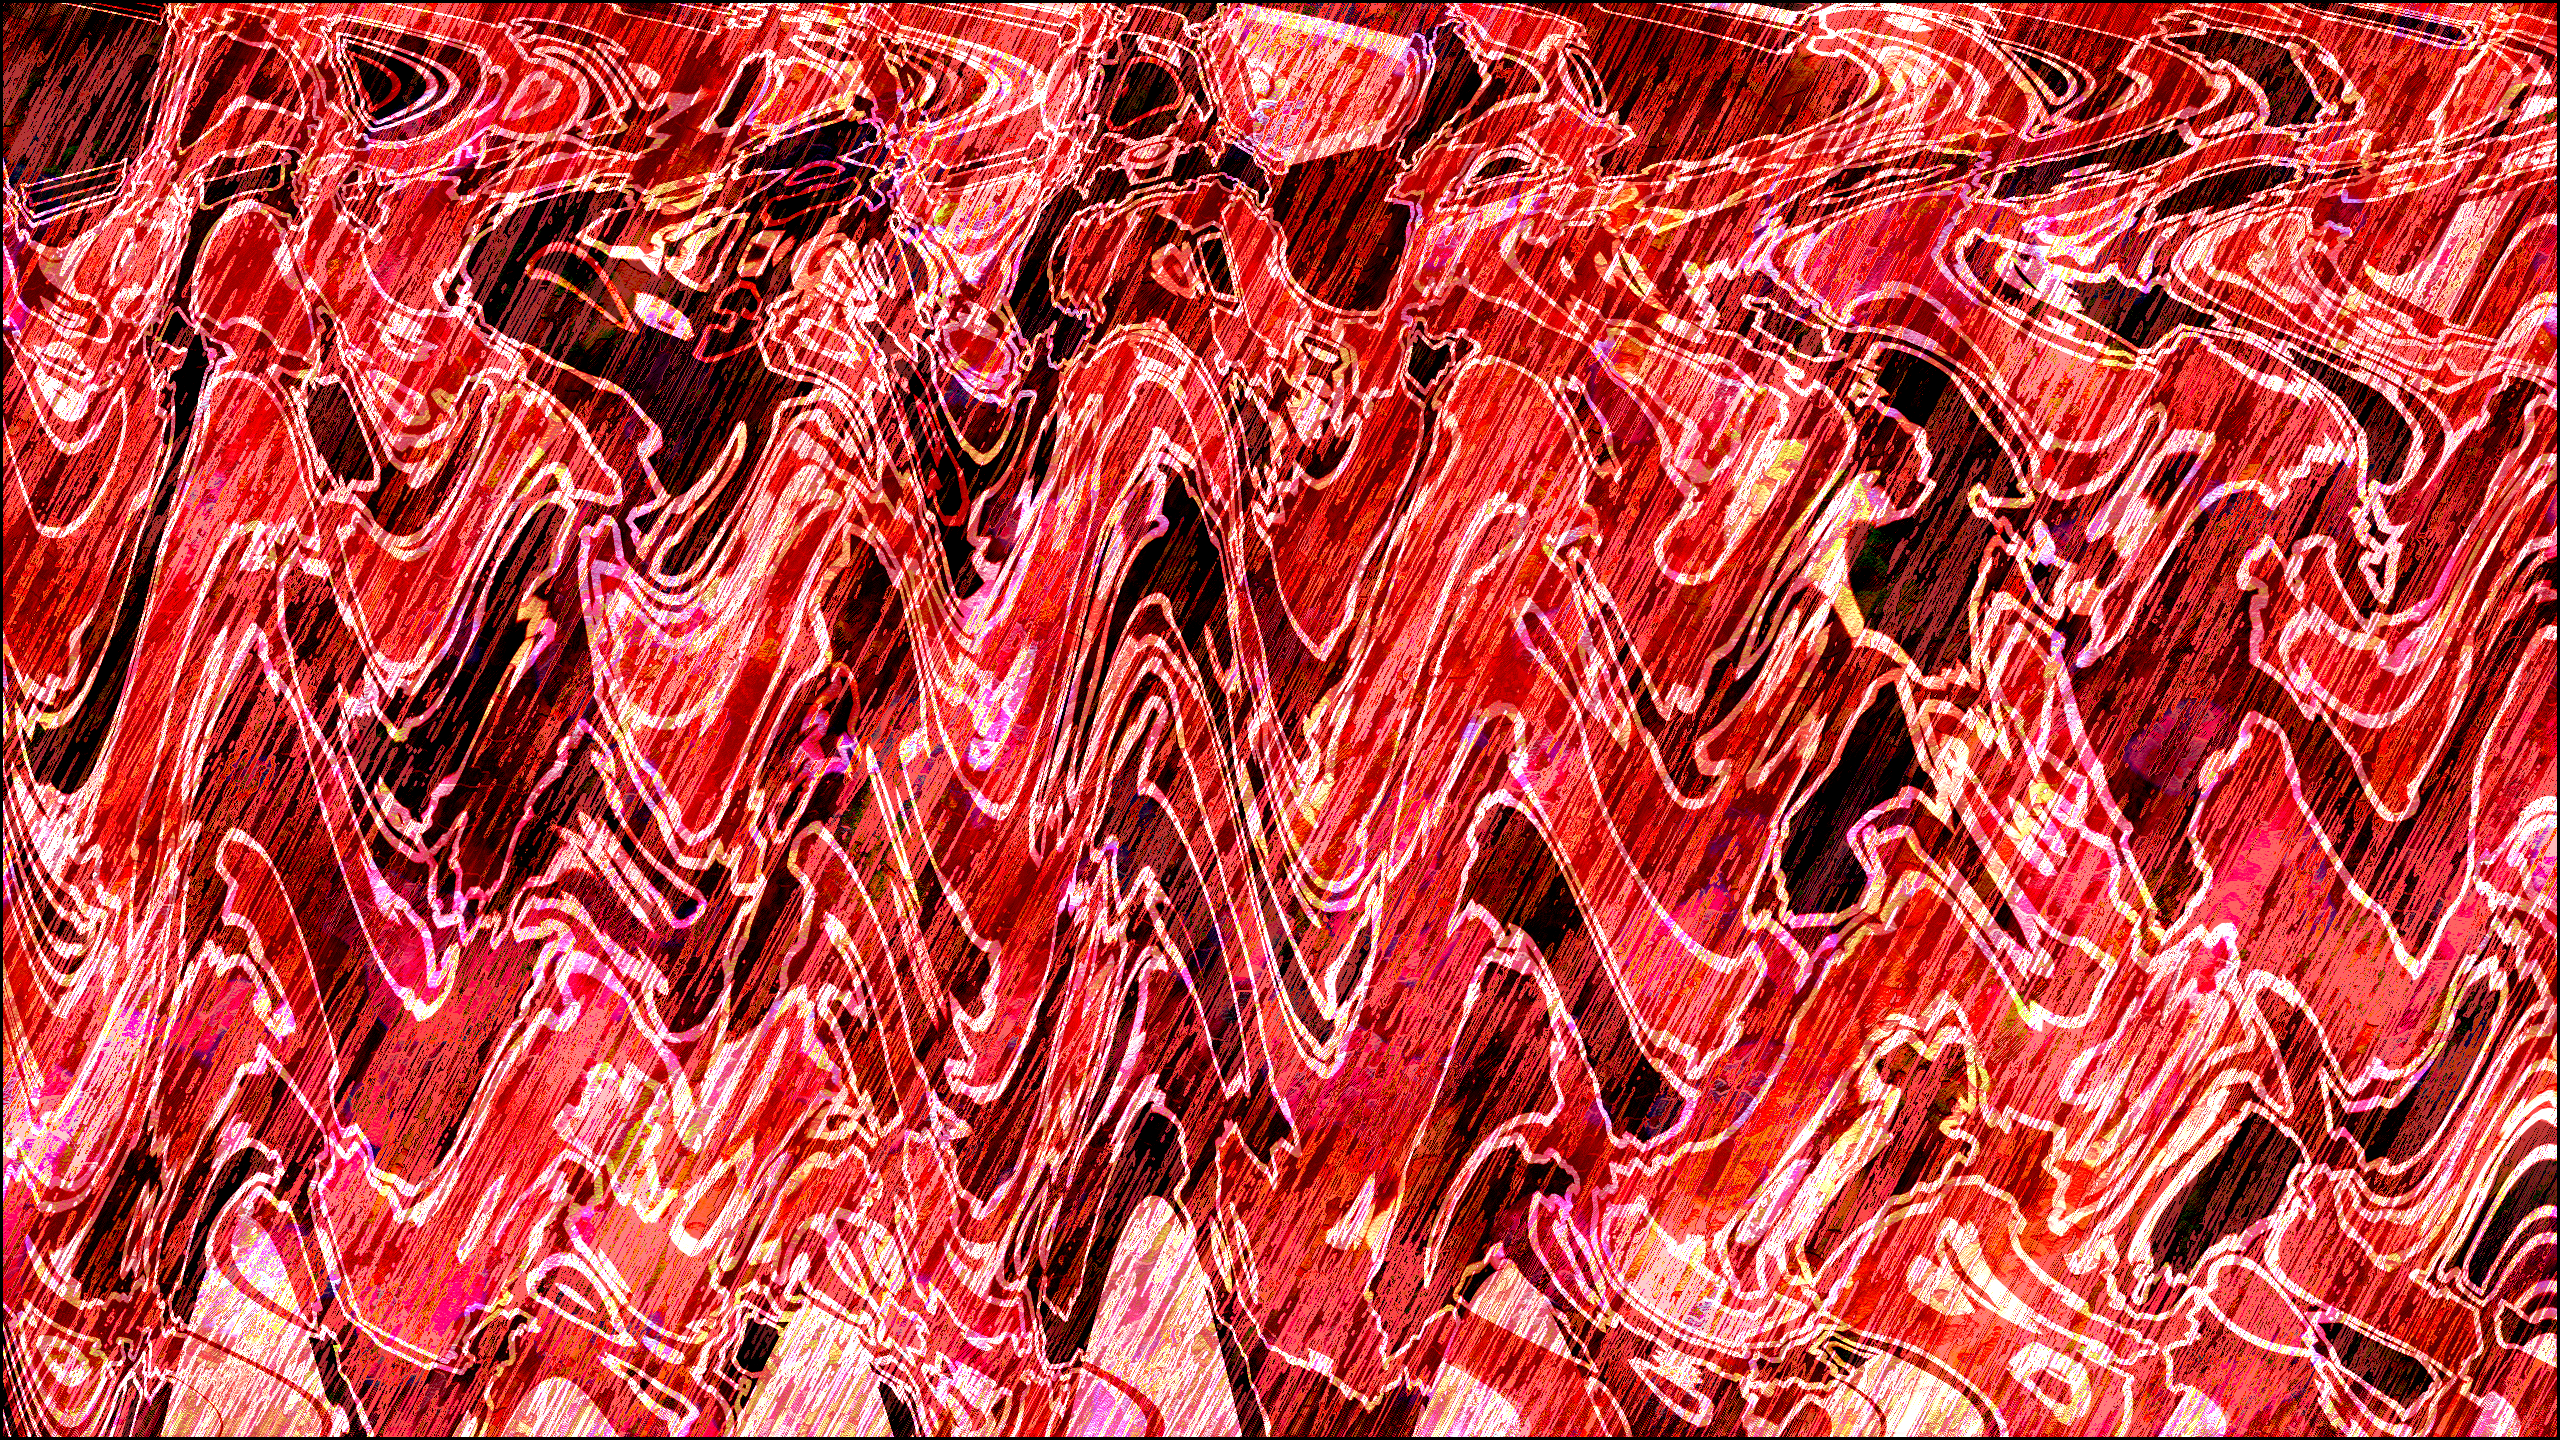 General 2560x1440 abstract digital art trippy brightness